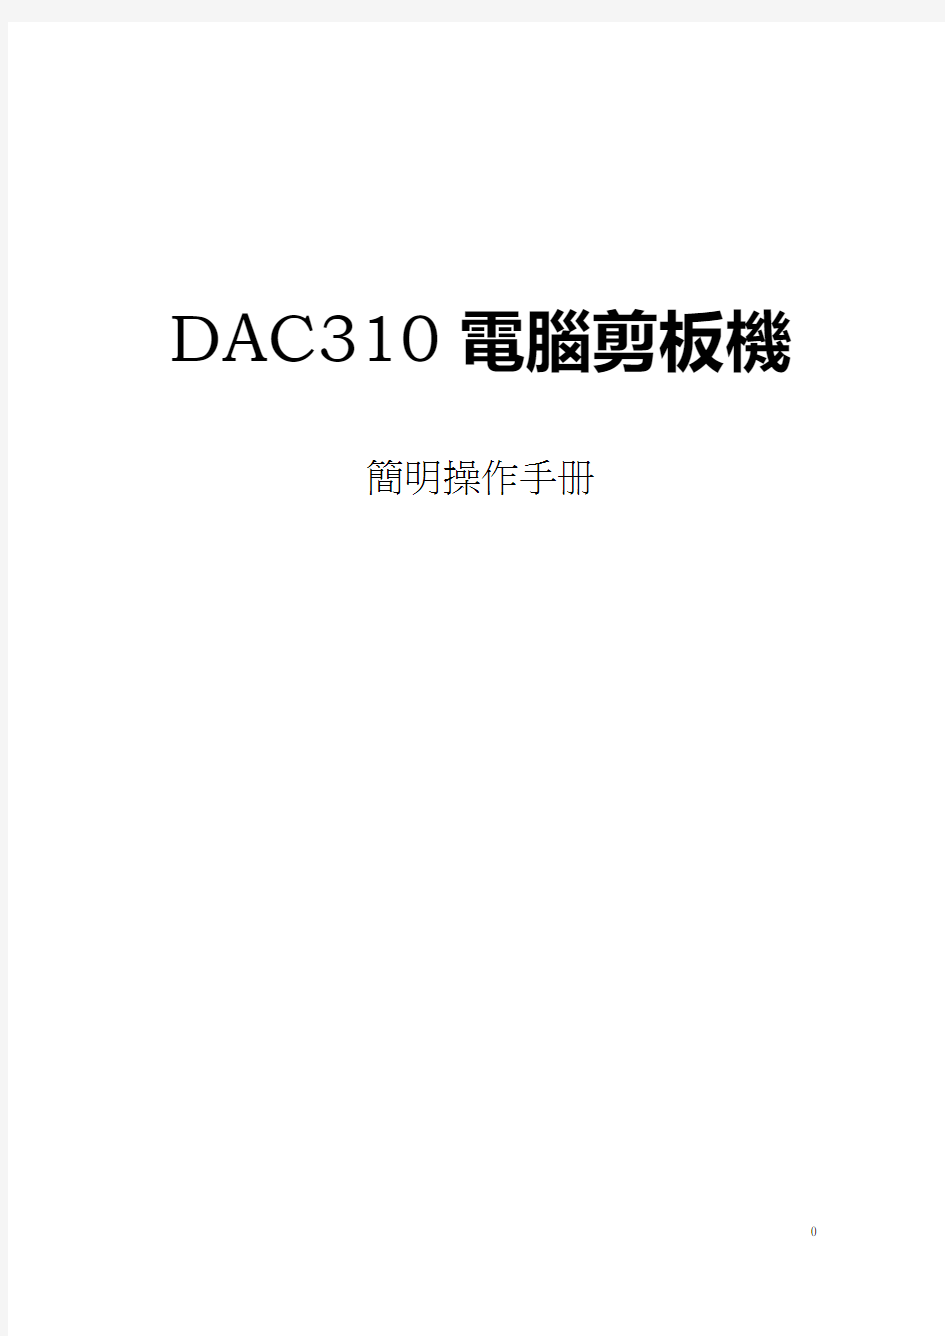 DAC310剪板机电脑说明书